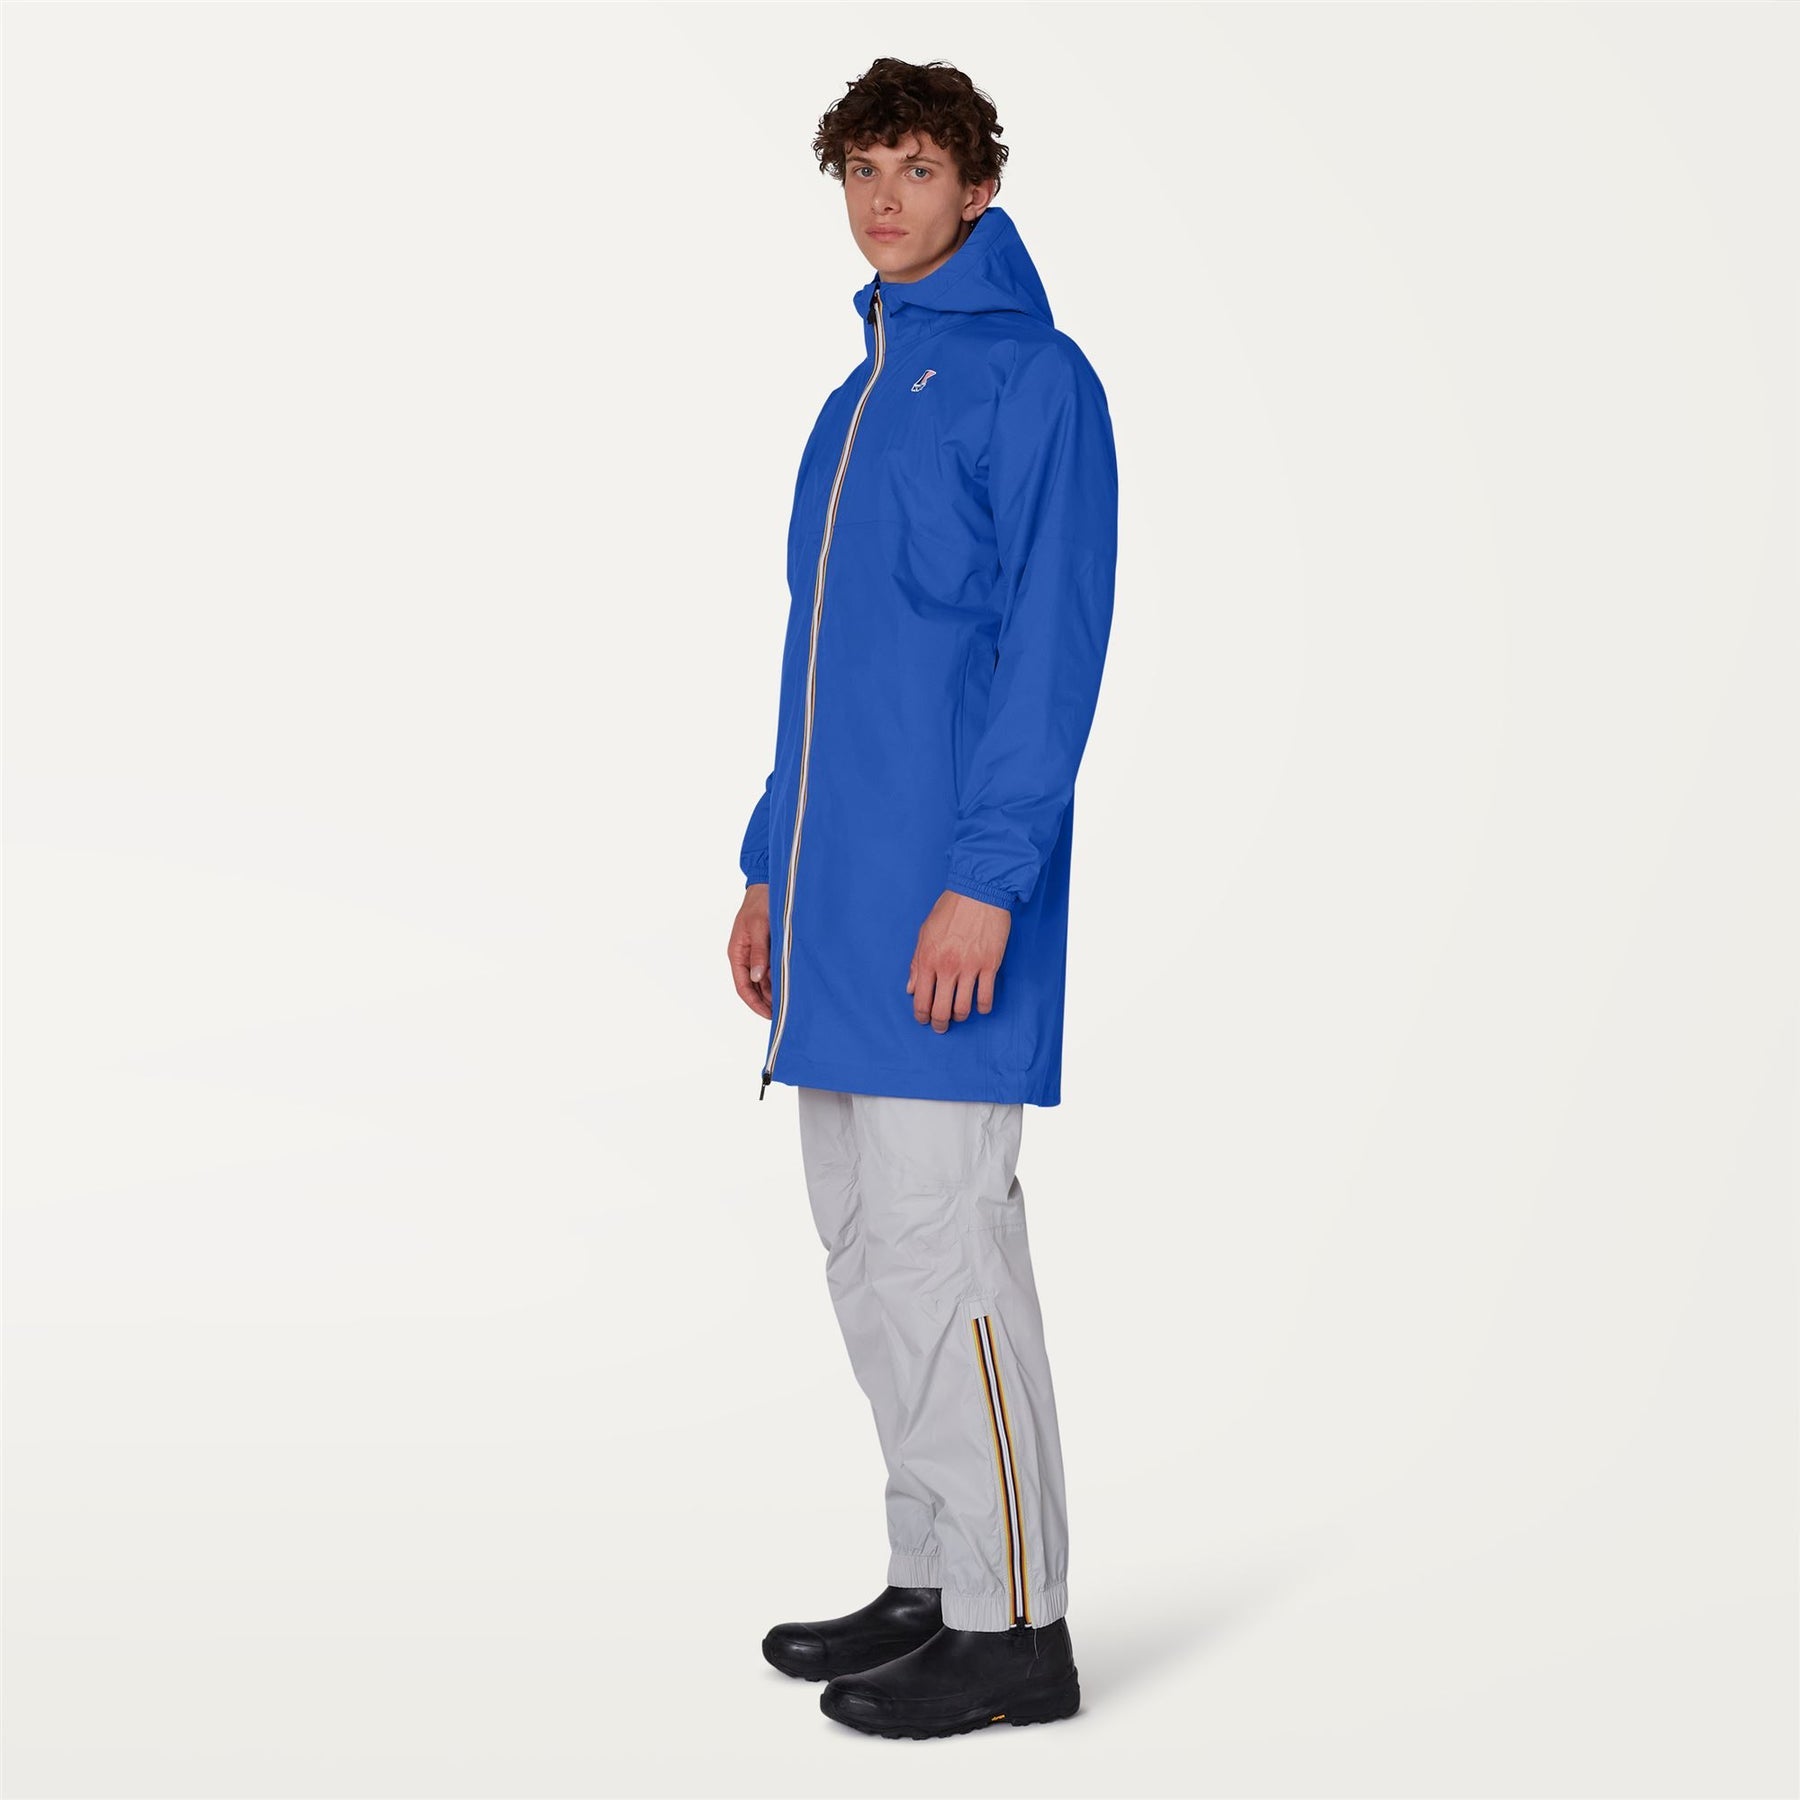 Eiffel - Unisex Waterproof Packable Long Rain Jacket in Blue Royal Marine